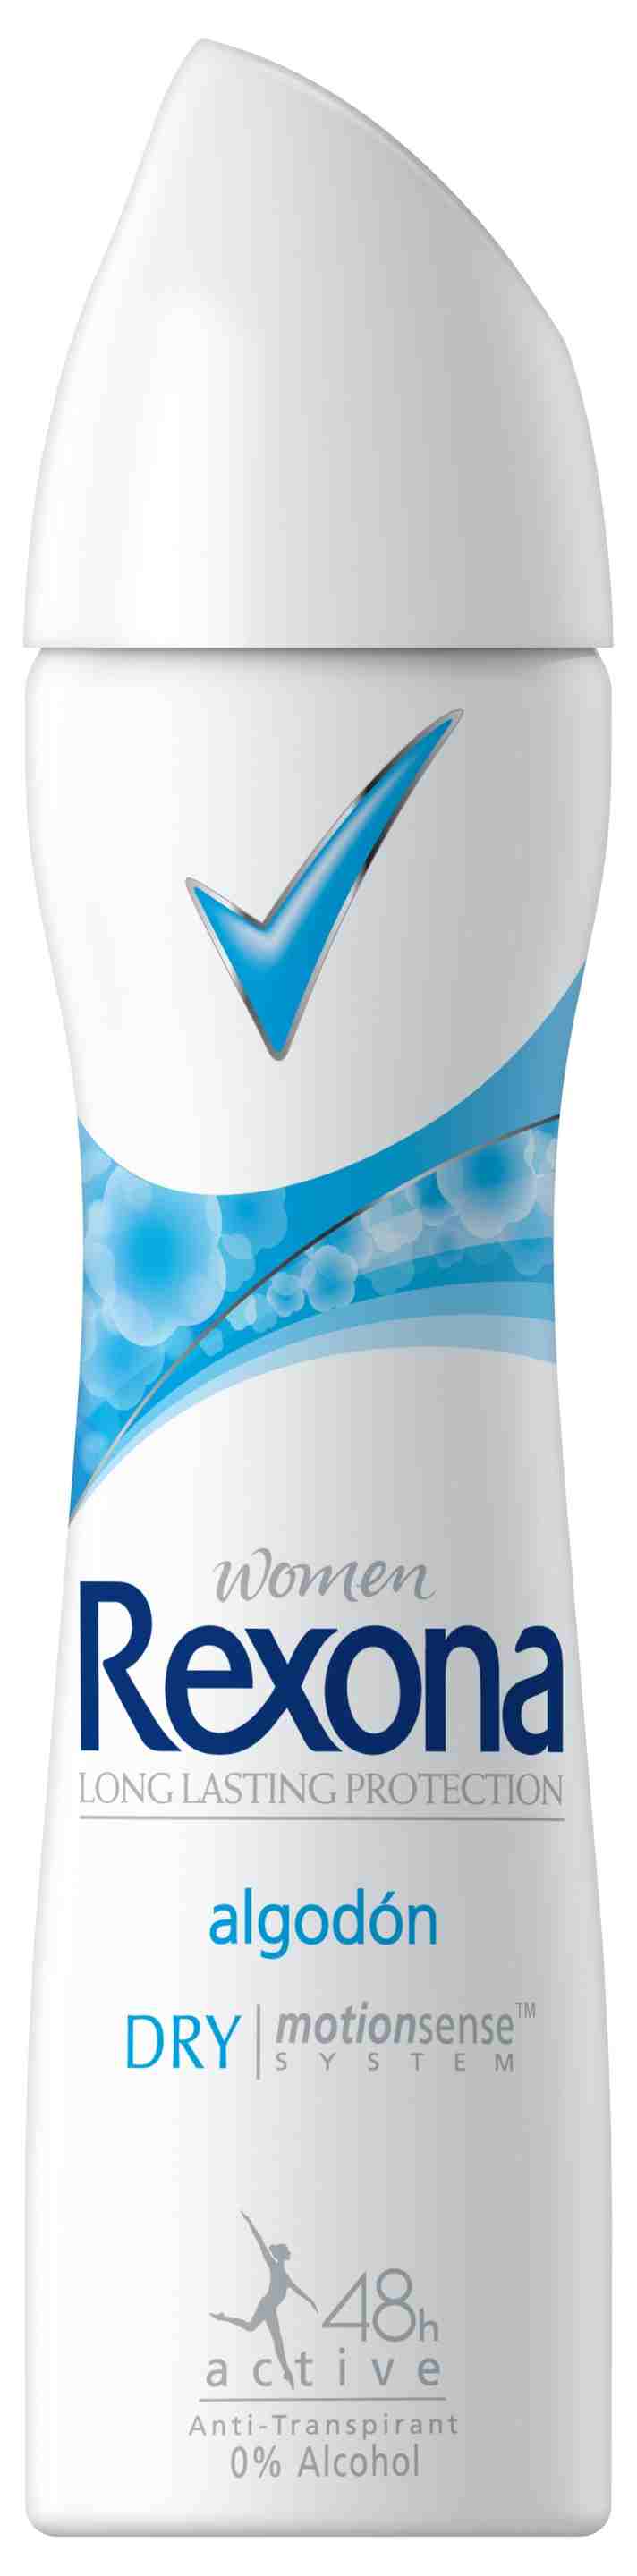 Foto Rexona Women Desodorante Algodón sin alcohol